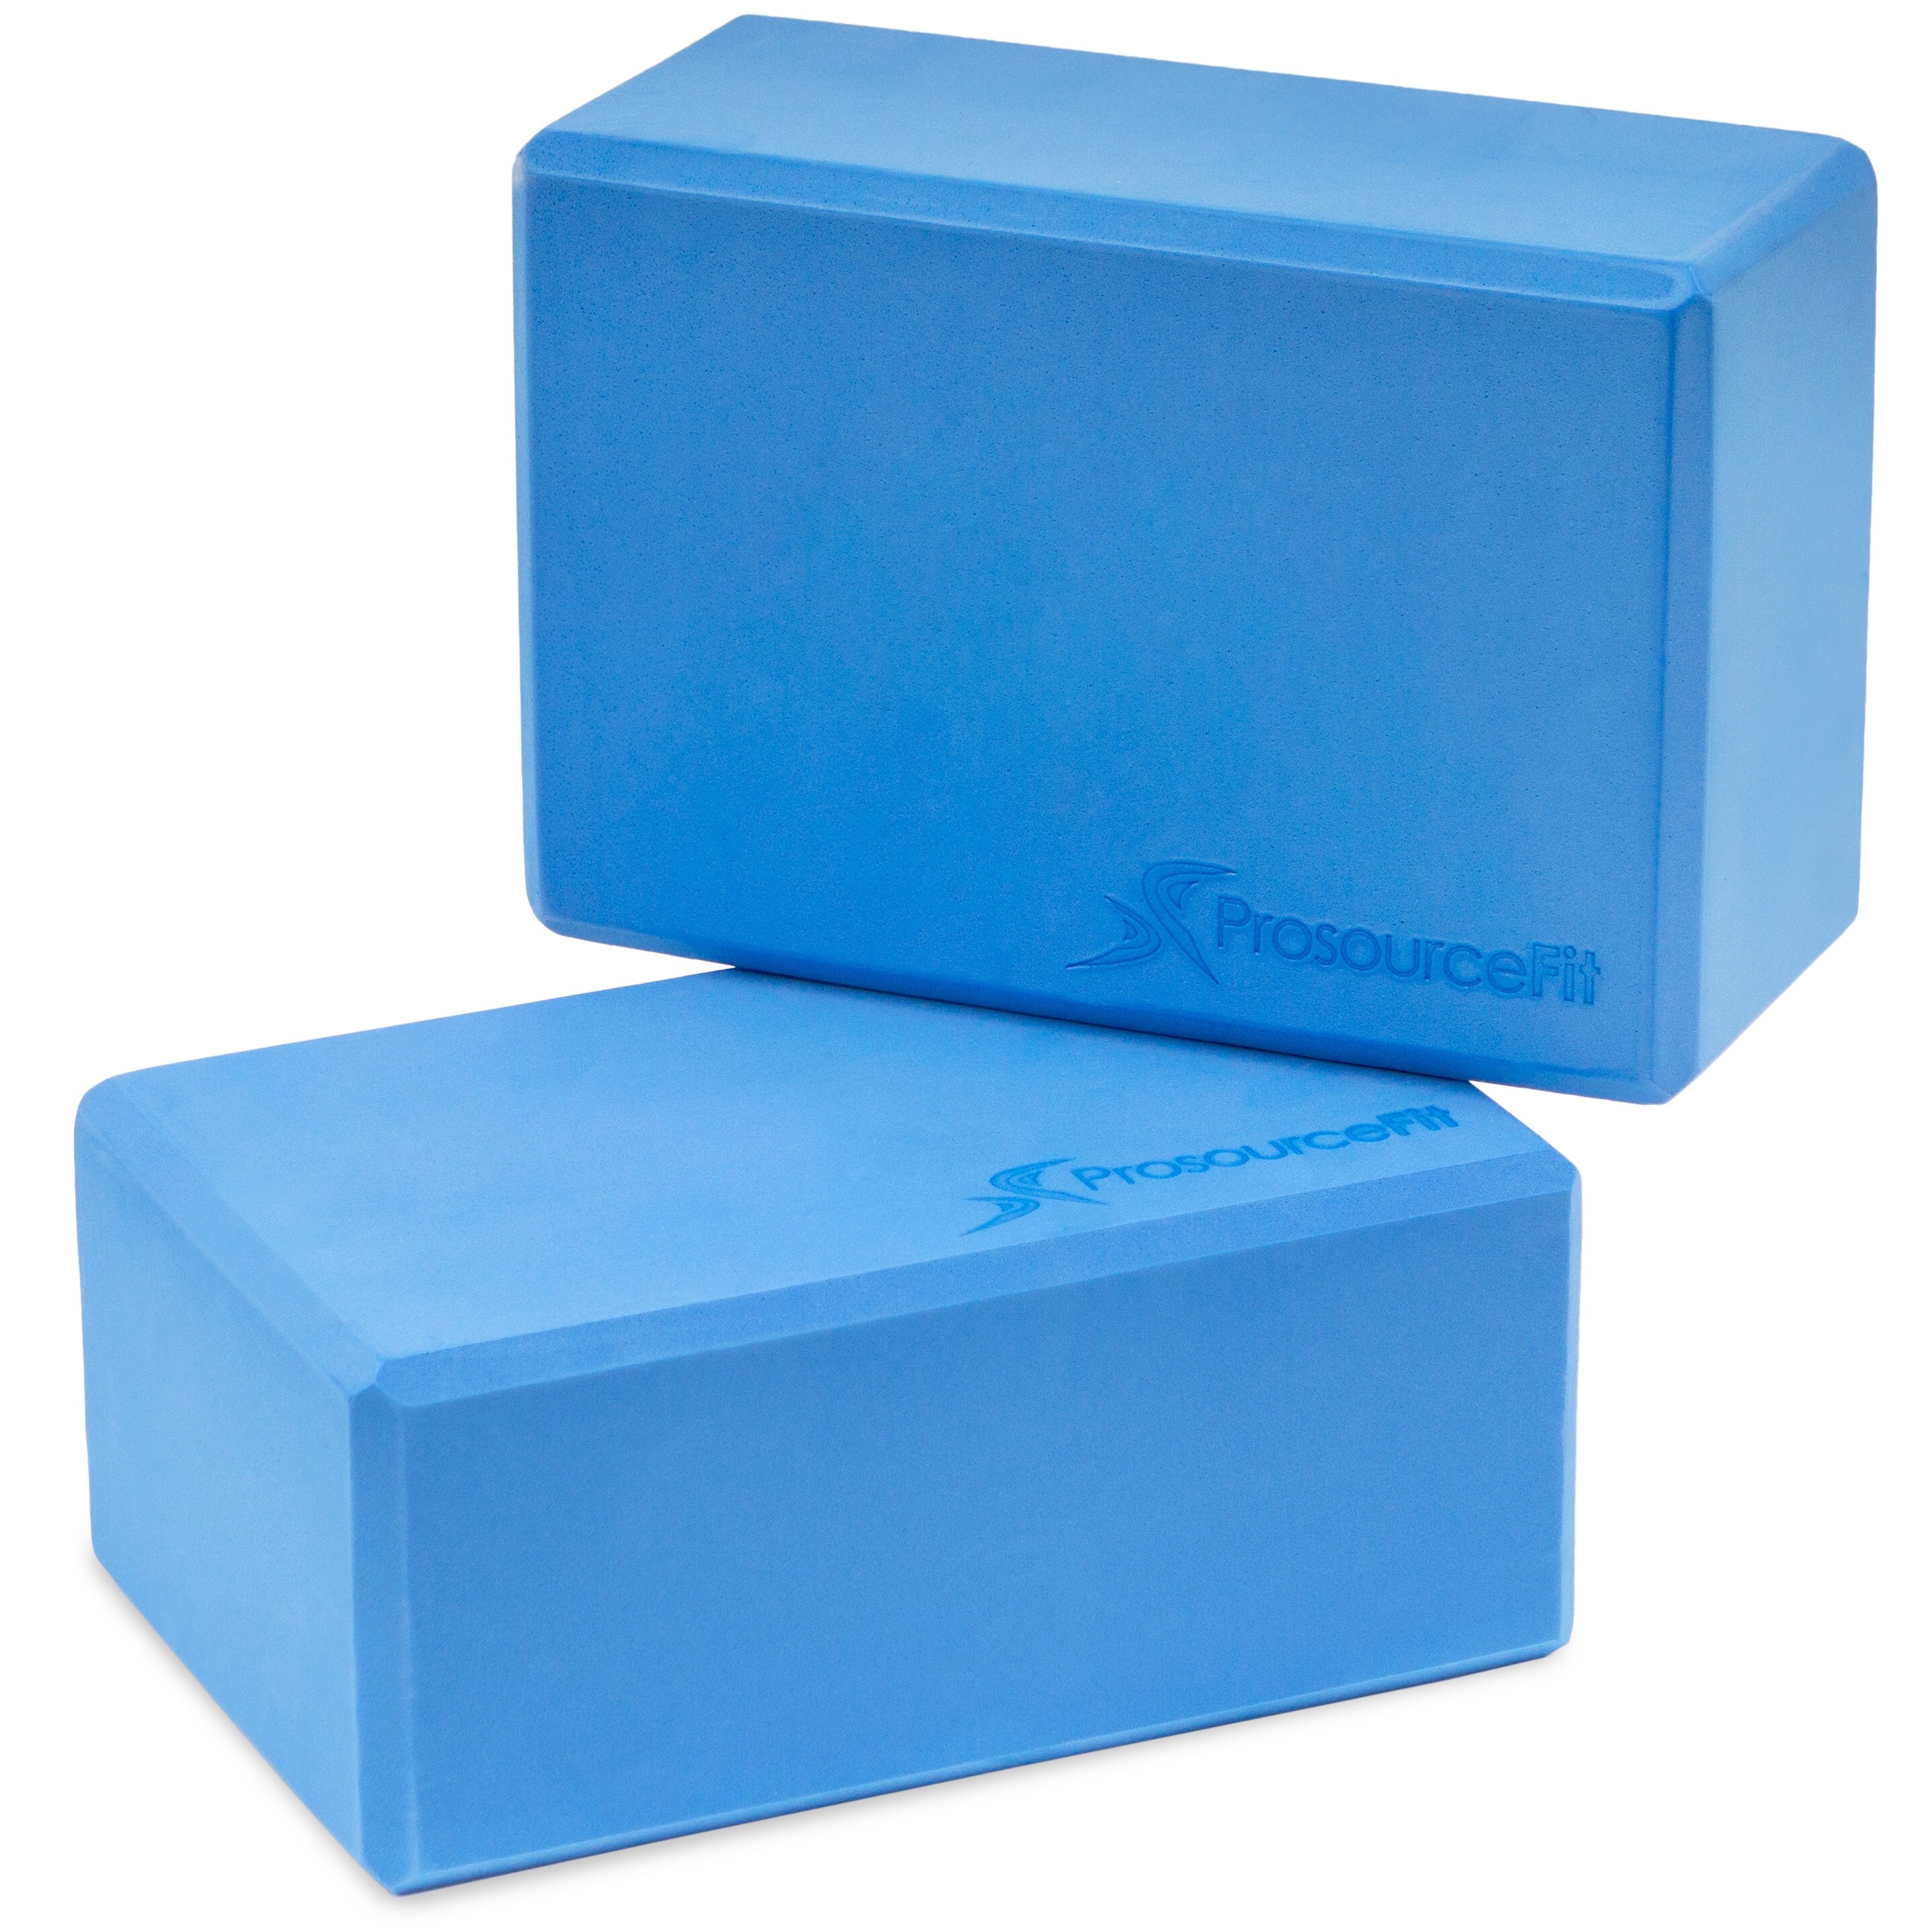 Prosource Fit Foam Yoga Blocks Set of 2 High Density Size, 9